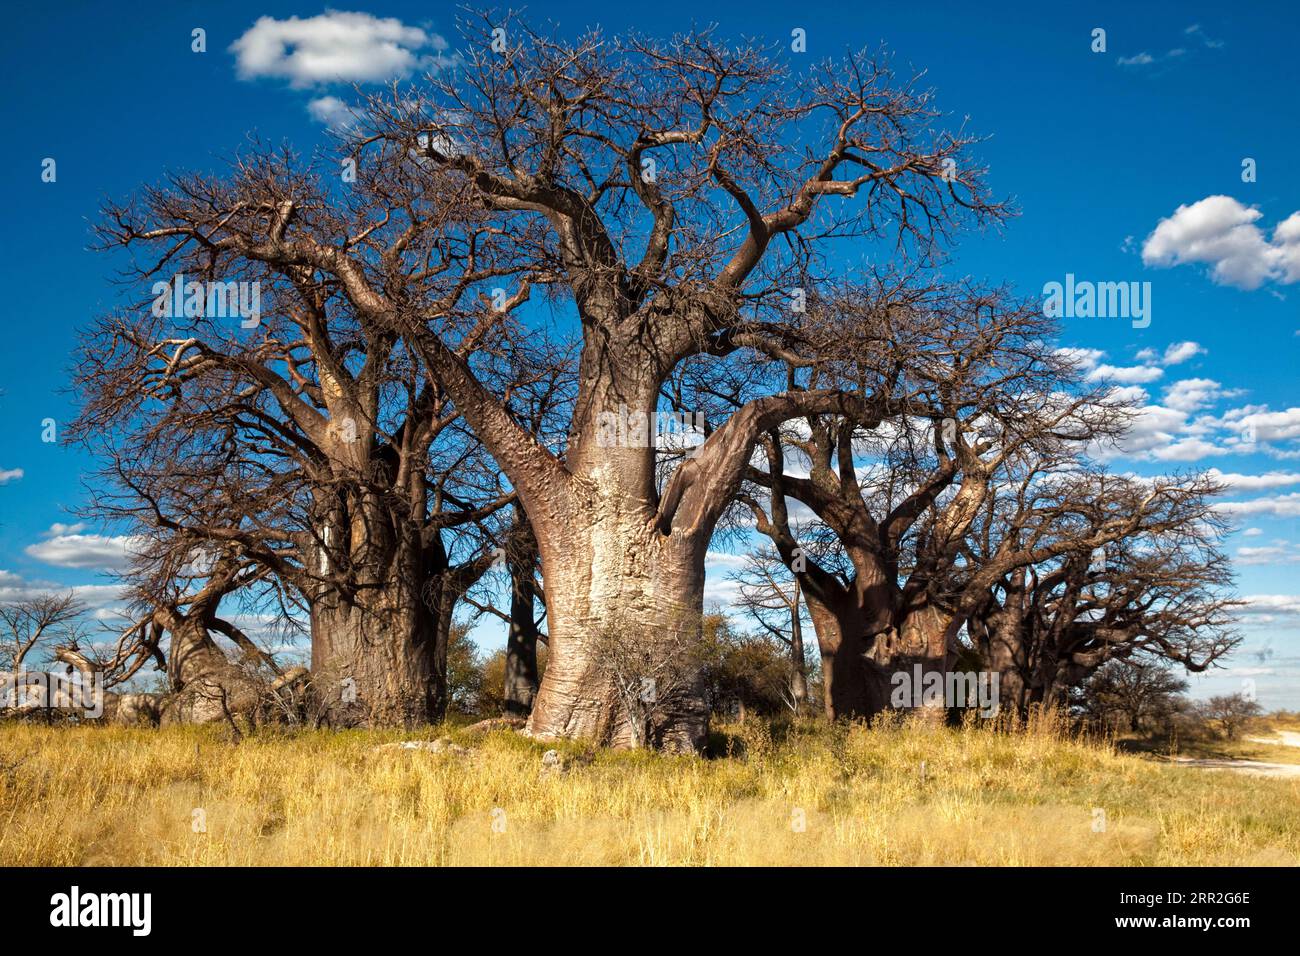 Gruppo di alberi con baobab africano molto antico (Adansonia digitata), Baines Baobabs, Nxai Pan National Park, Botswana Foto Stock